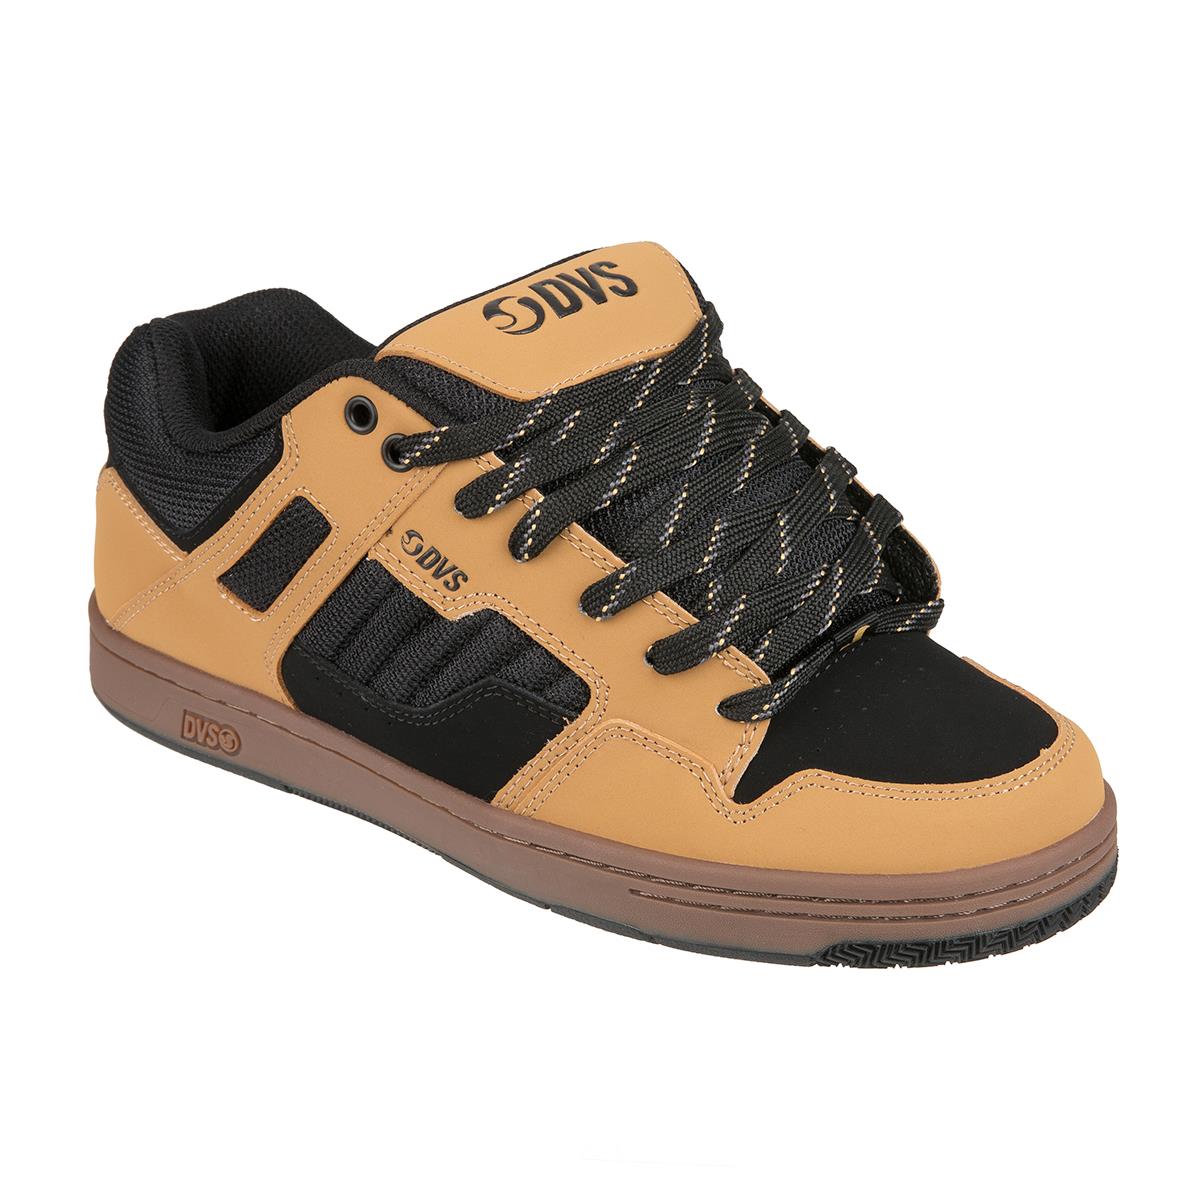 DVS Schuhe Enduro 125 Deegan - Black/Chamois/Nubuck